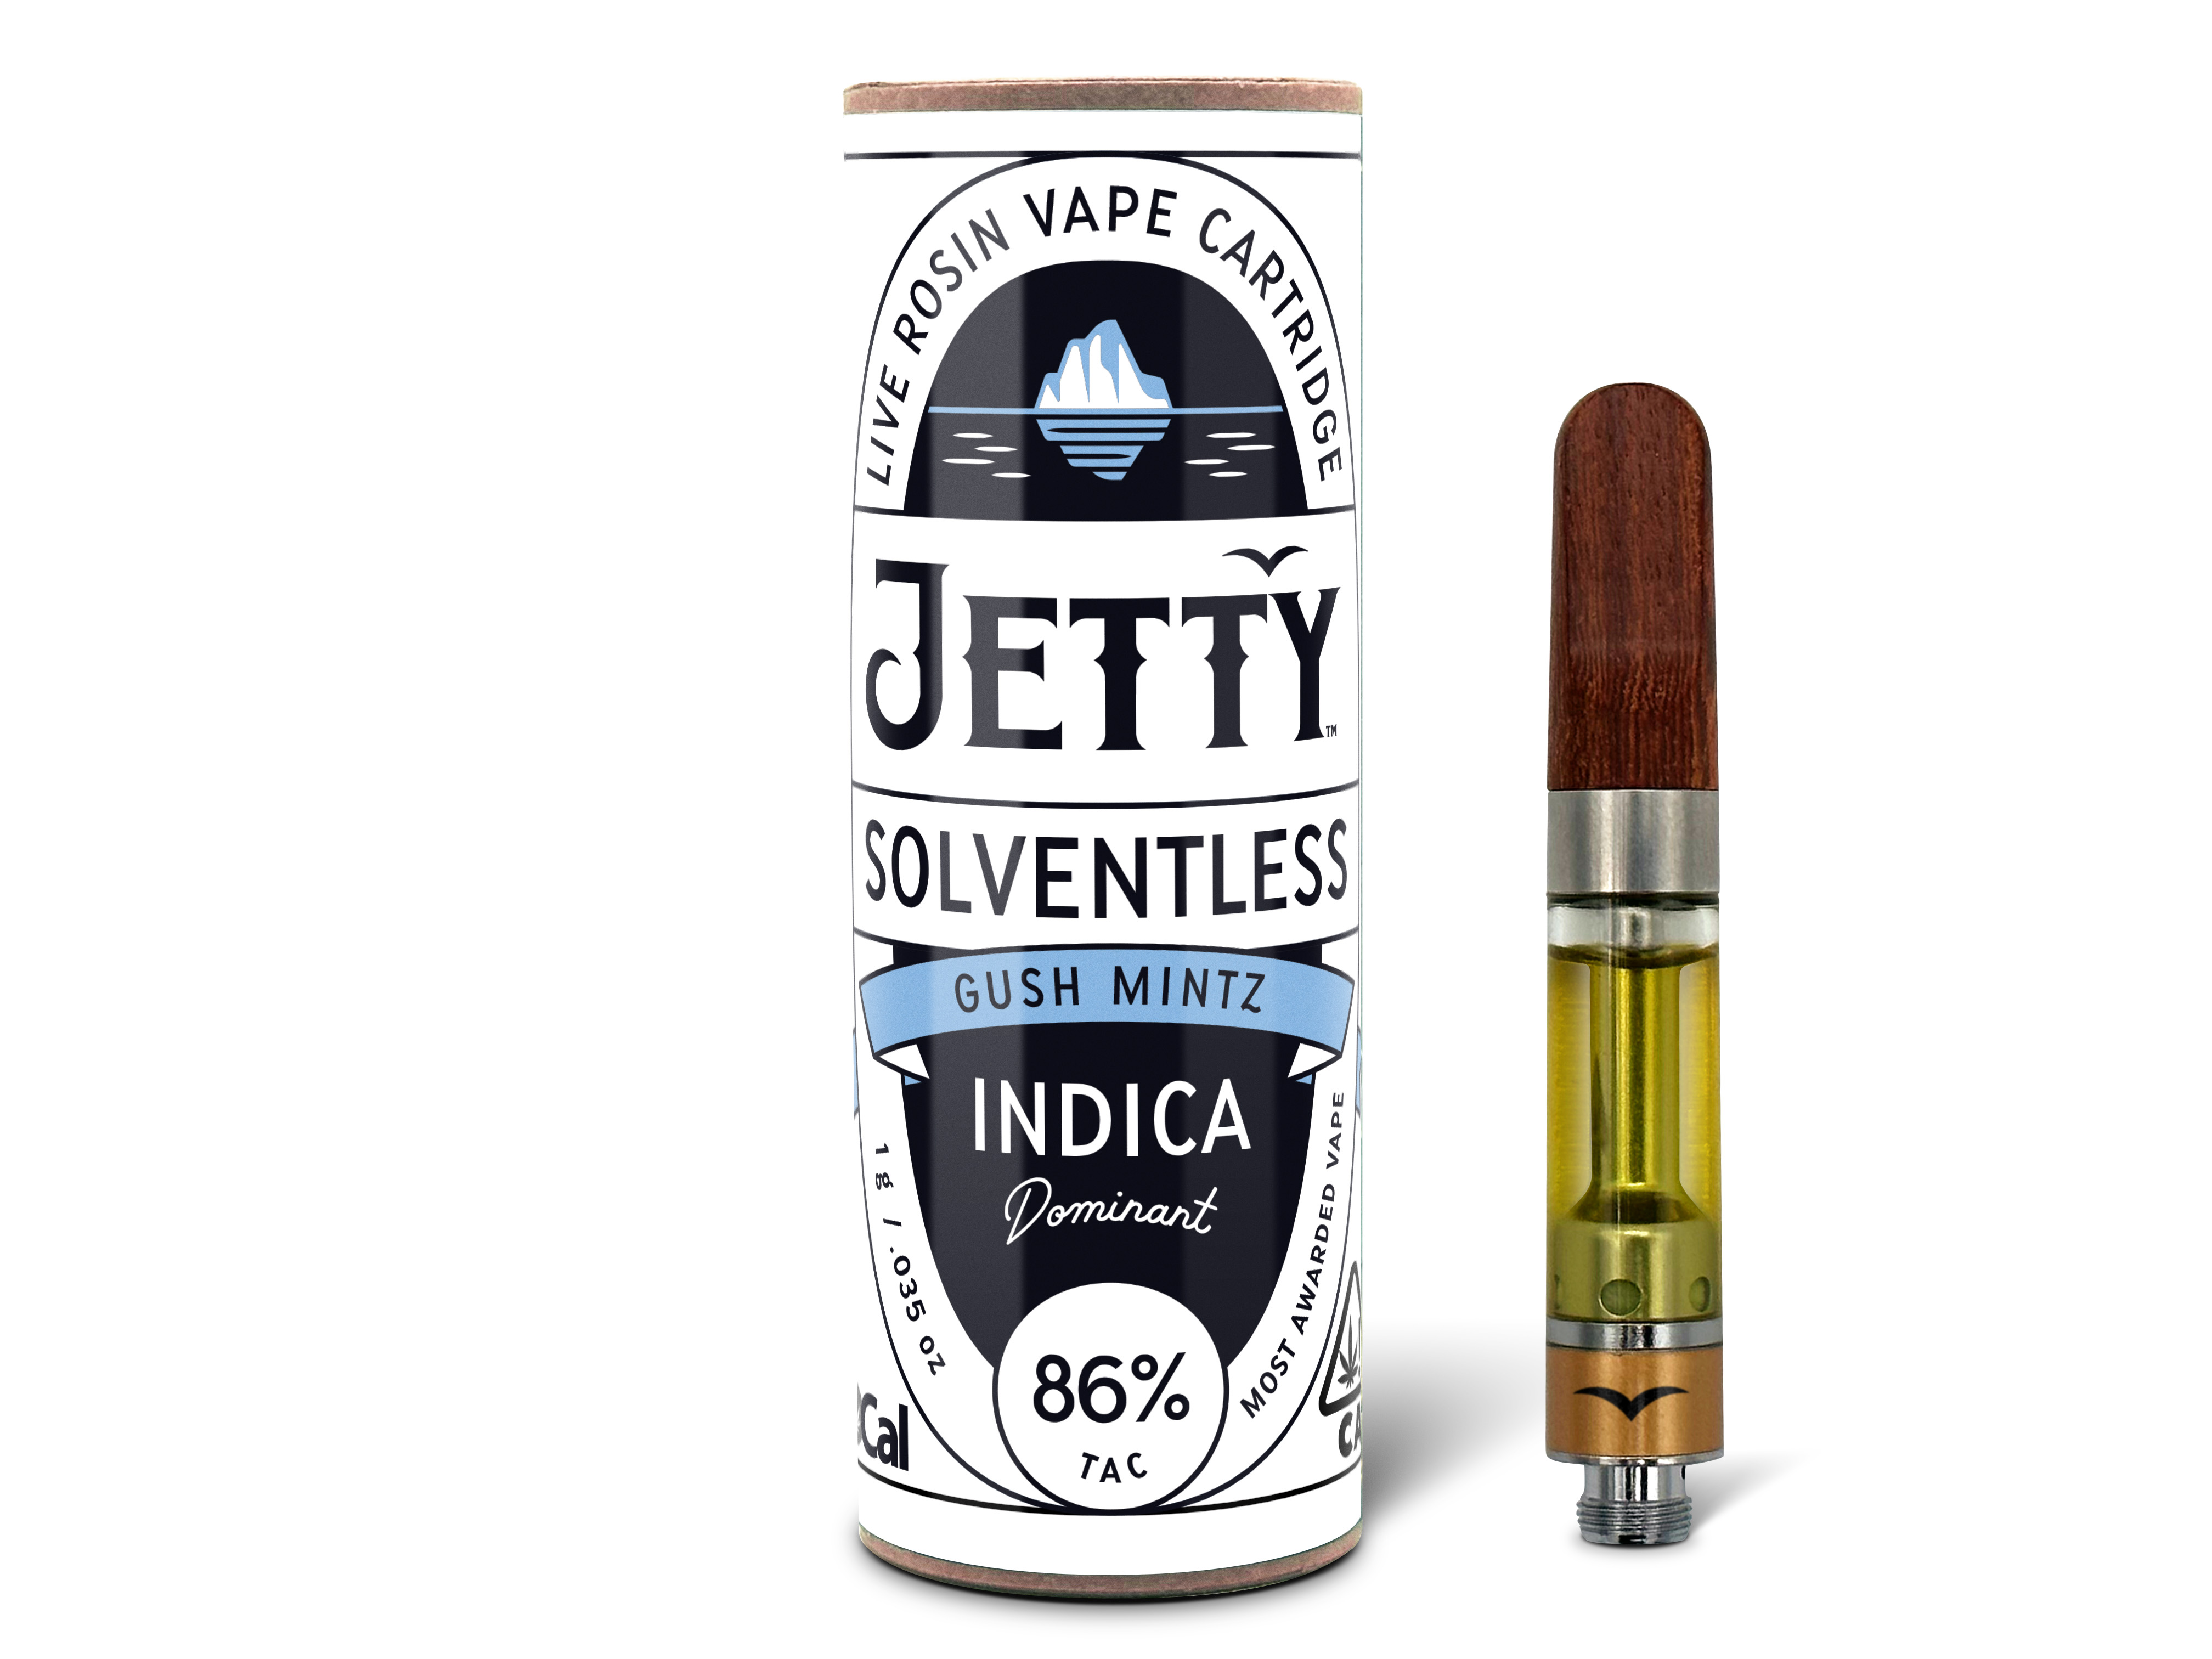 A photograph of Jetty Cartridge OCAL 1g Solventless Gush Mintz